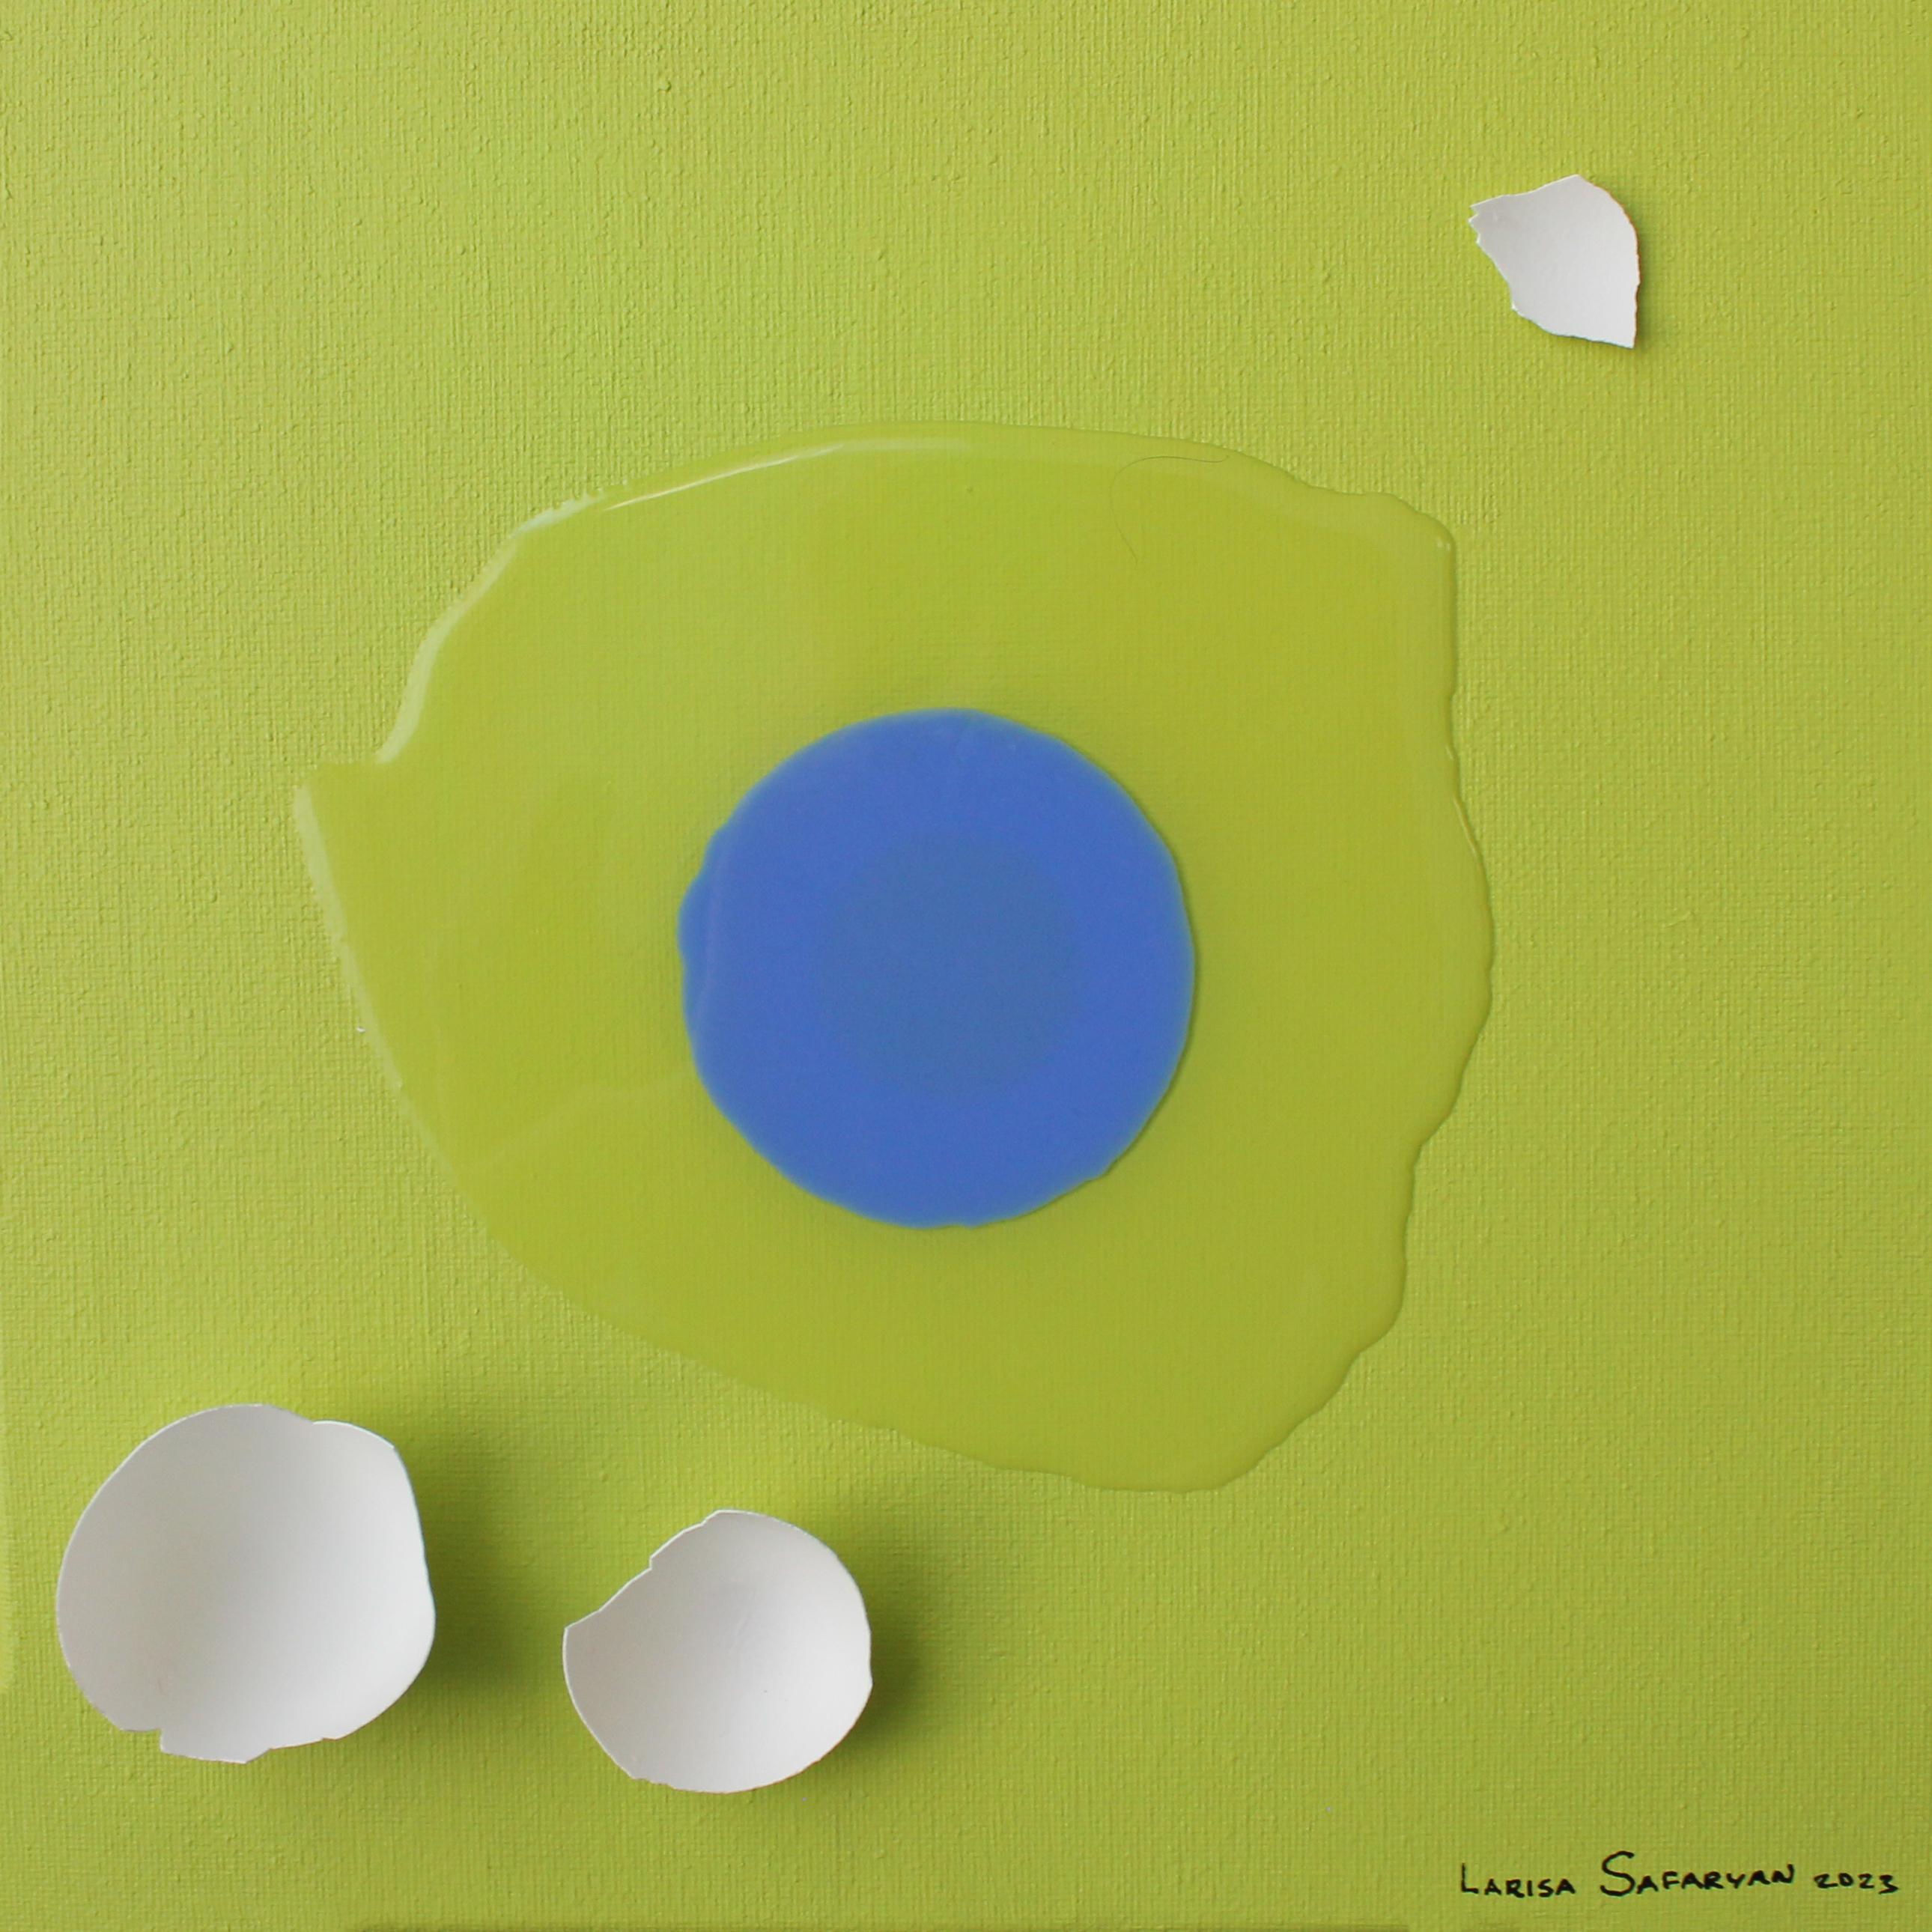 Larisa Safaryan Abstract Painting - Sunny Side Up 1